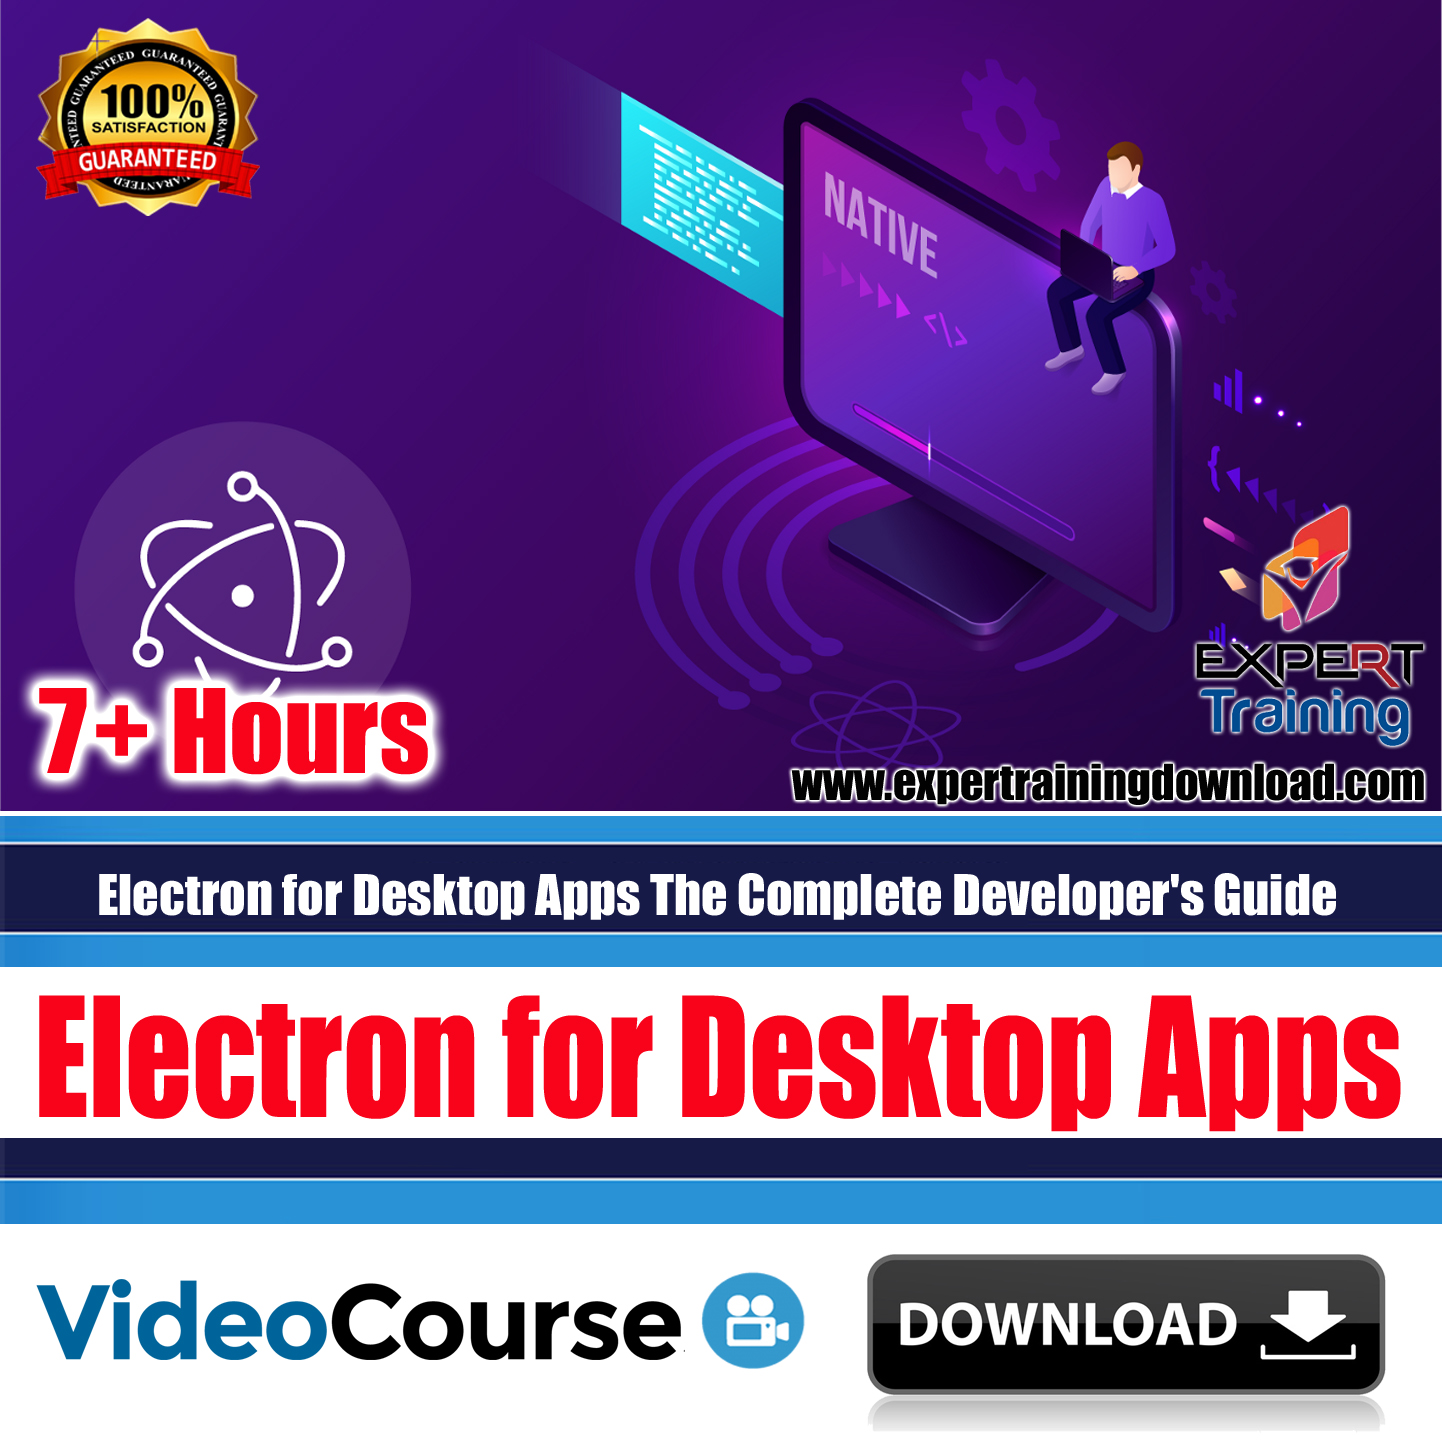 Electron for Desktop Apps The Complete Developer’s Guide